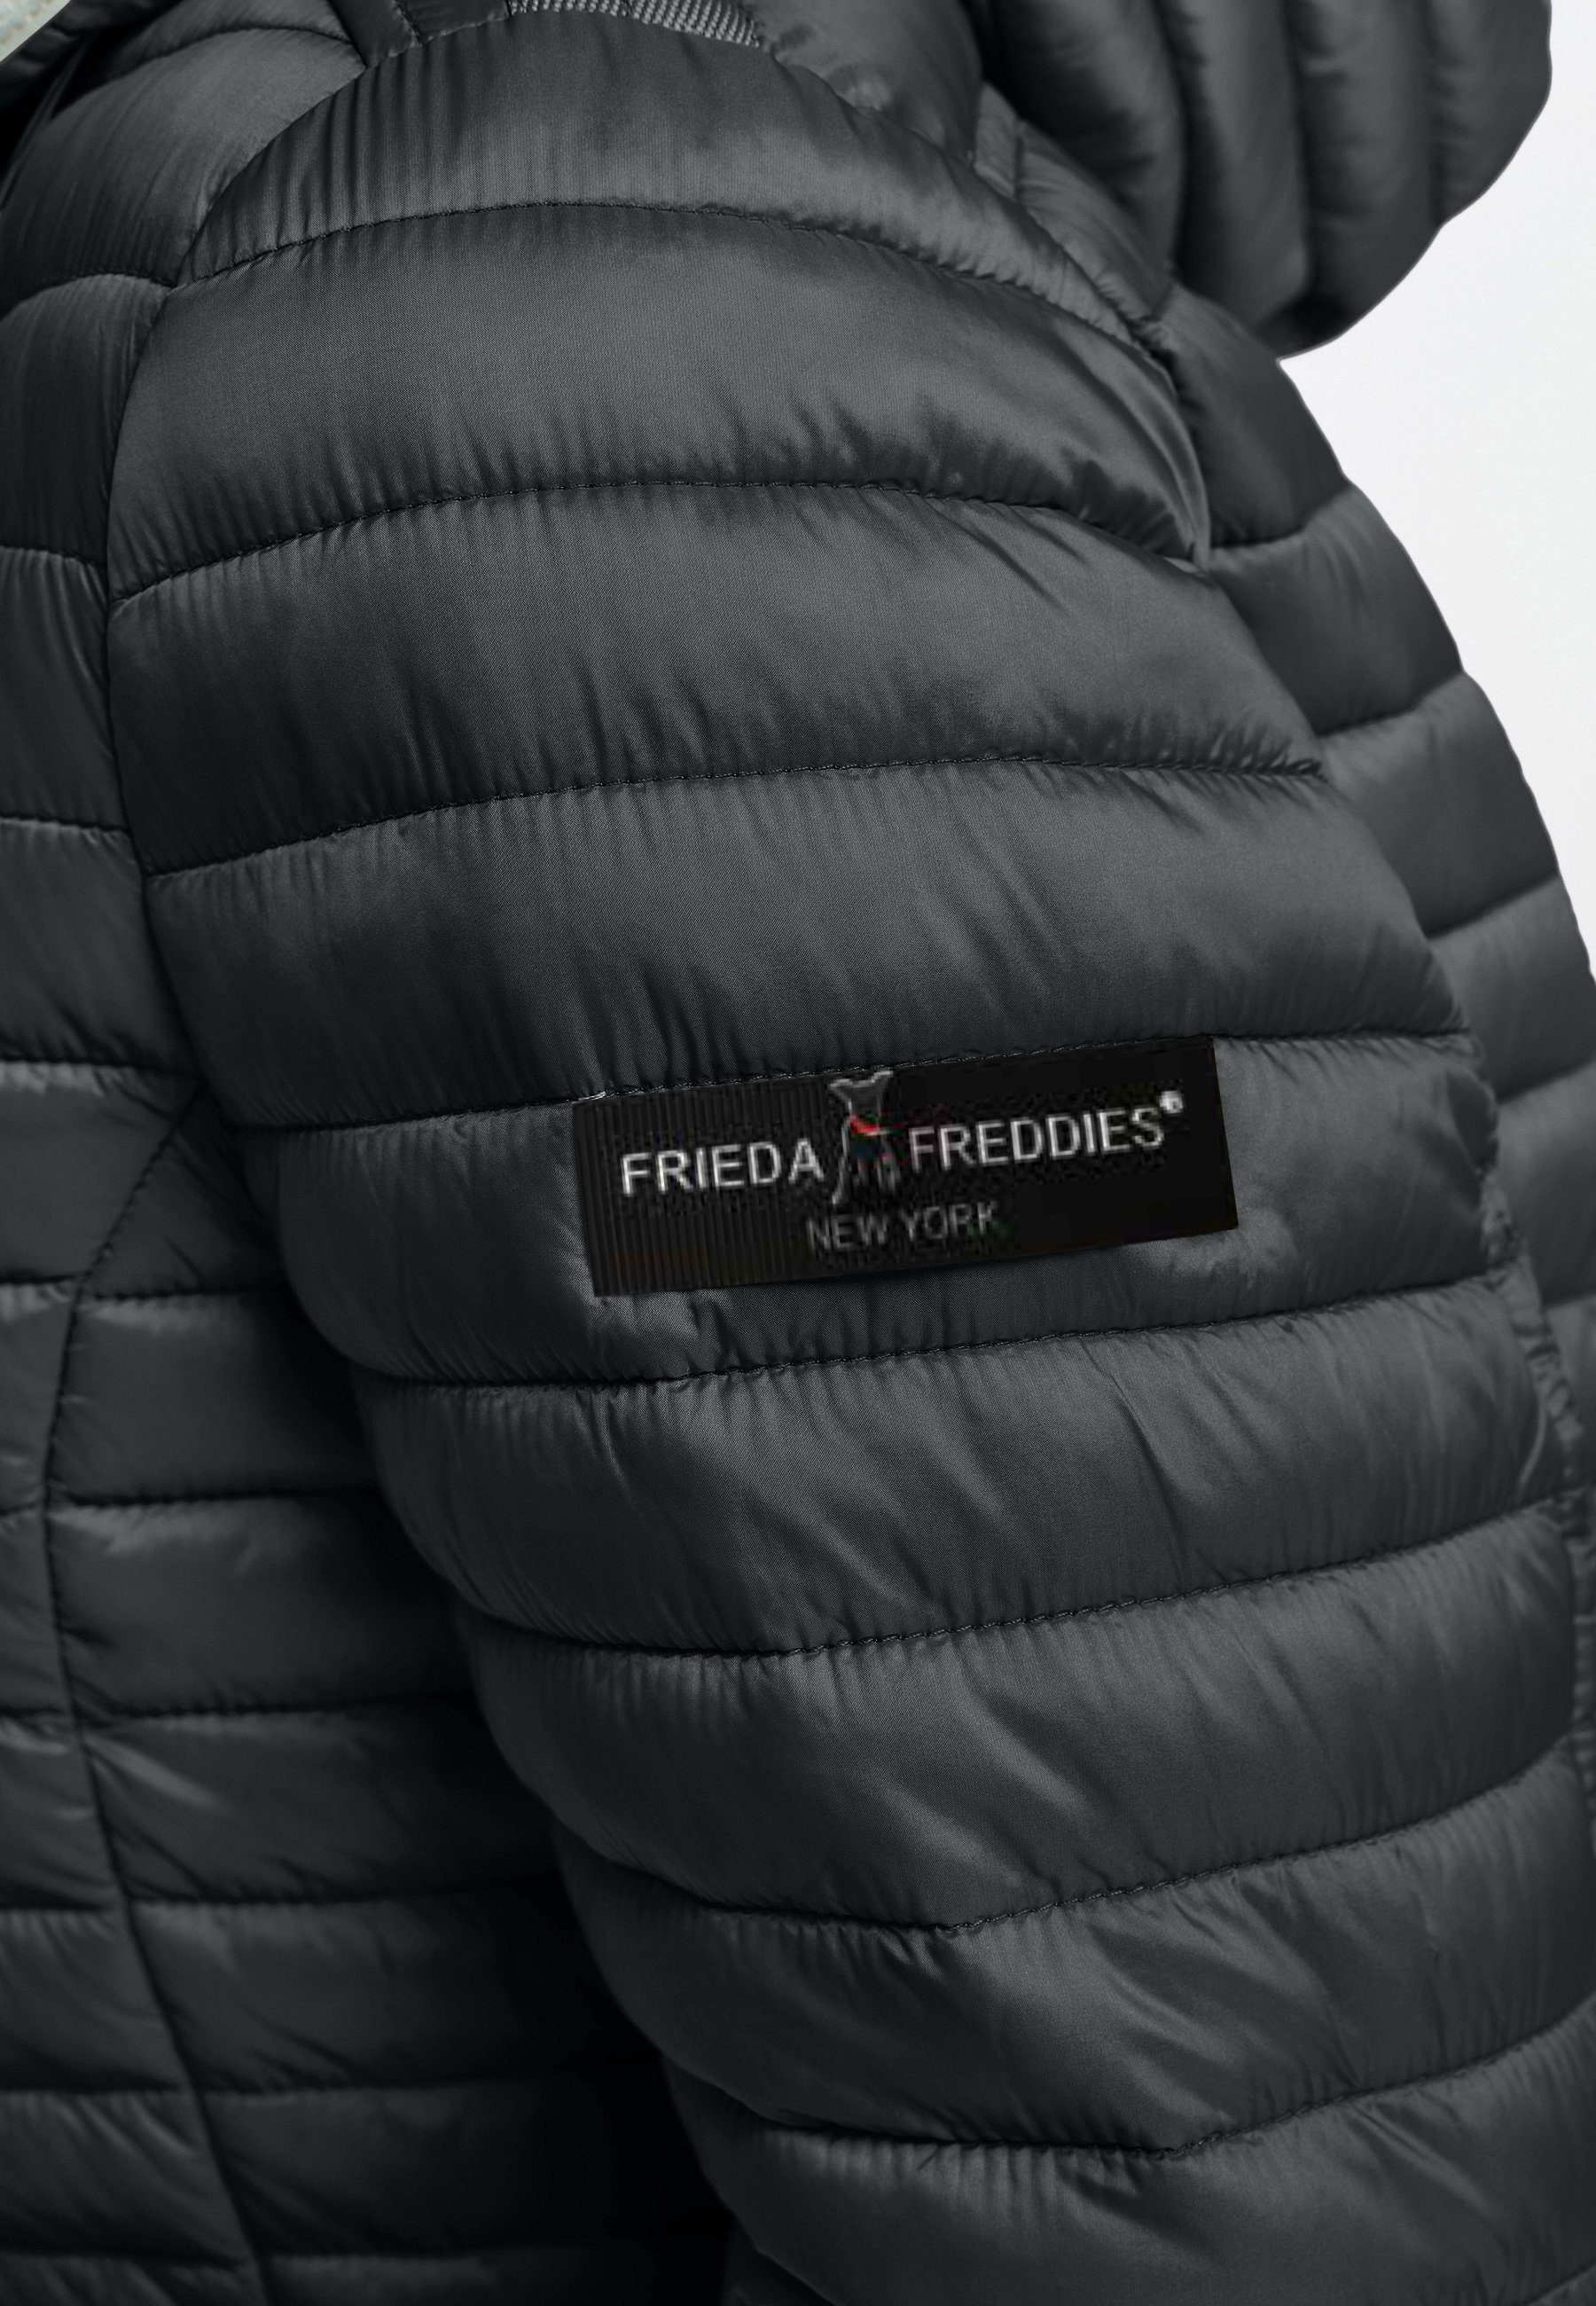 Fake Down Jacket, Frieda NY Freddies & grauschwarz Friday Winterjacke